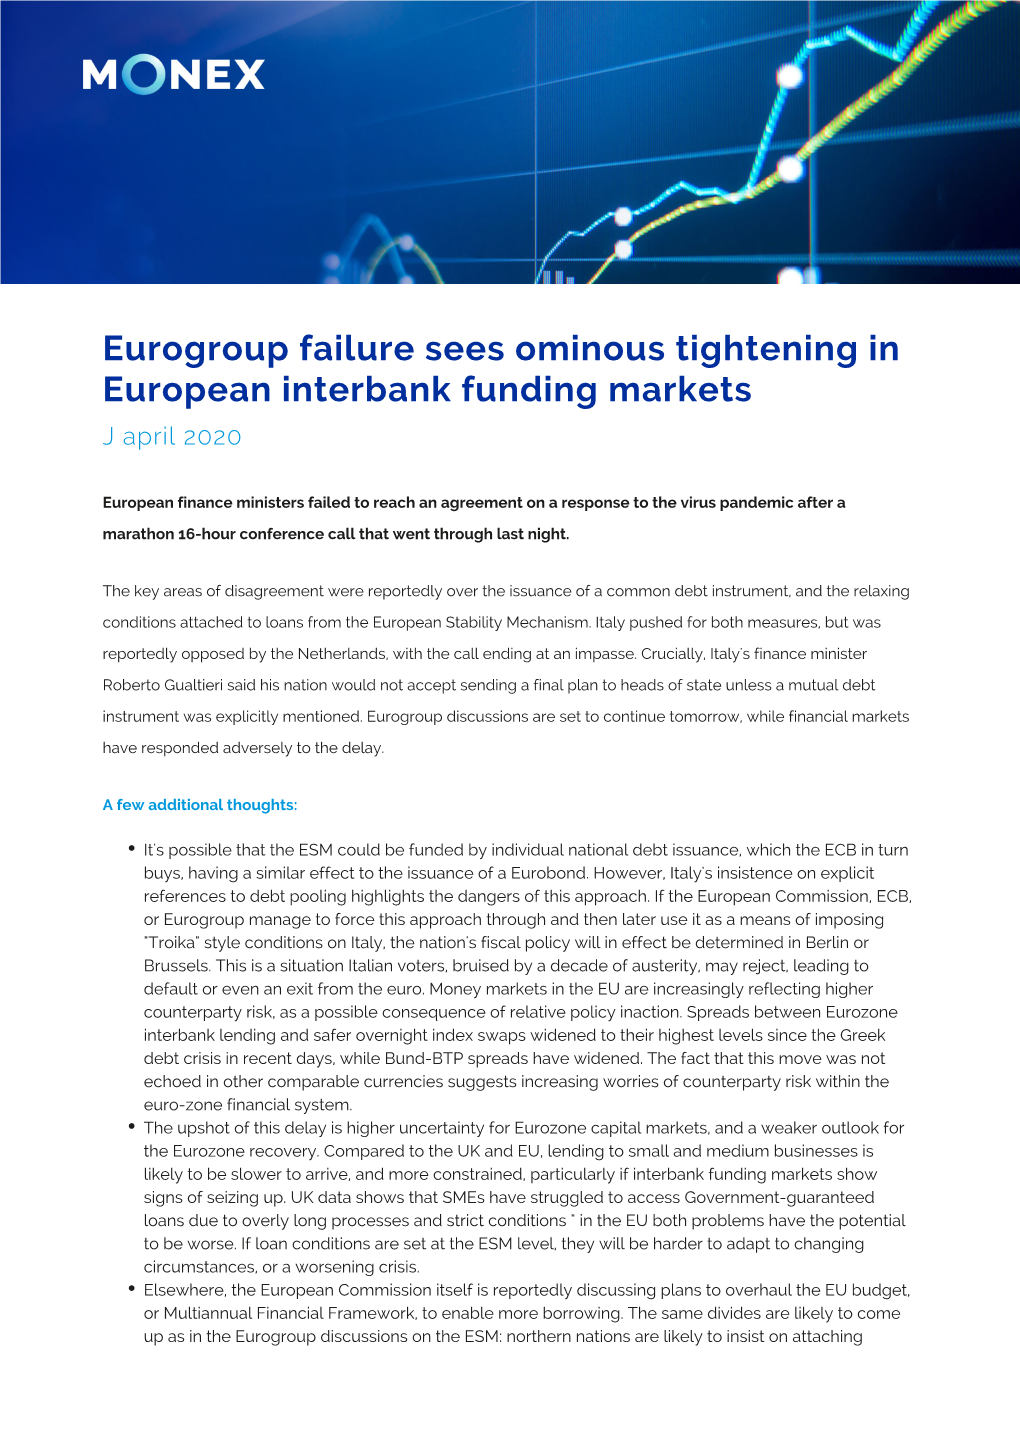 Eurogroup Failure Sees Ominous Tightening in European Interbank Funding Markets J April 2020